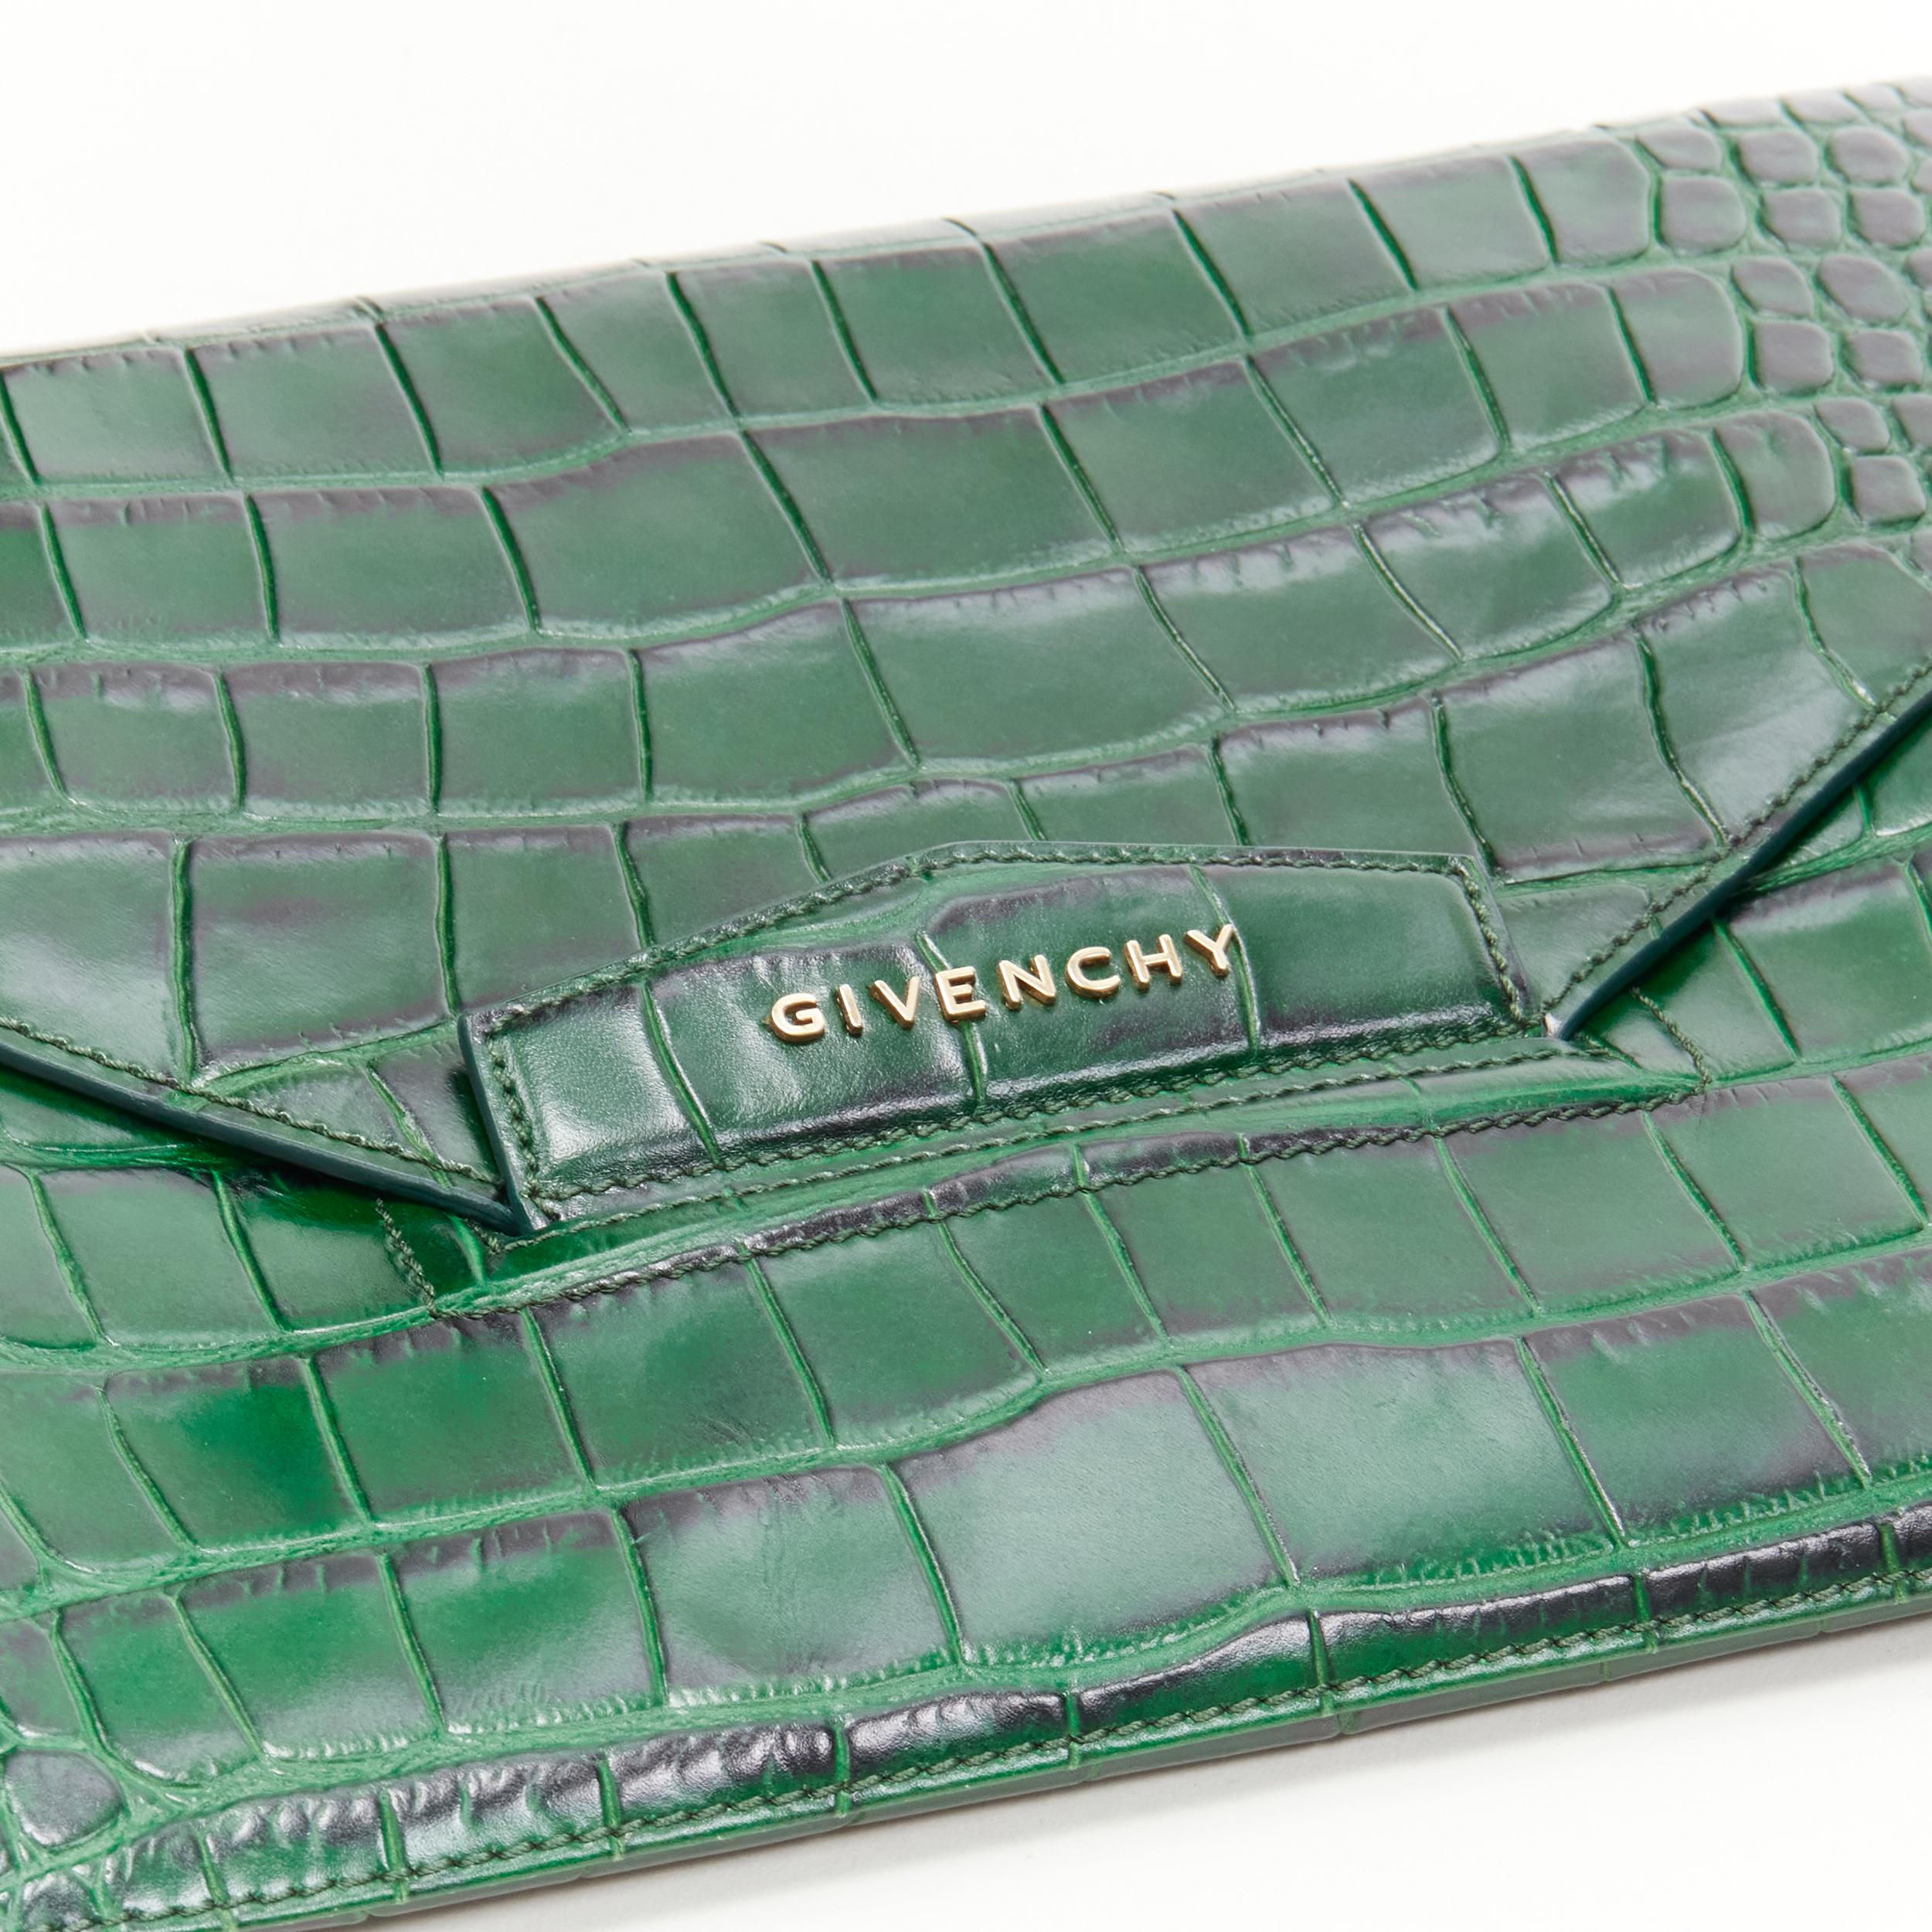 Black GIVENCHY Antigona green mock croc leather flap envelope clutch bag